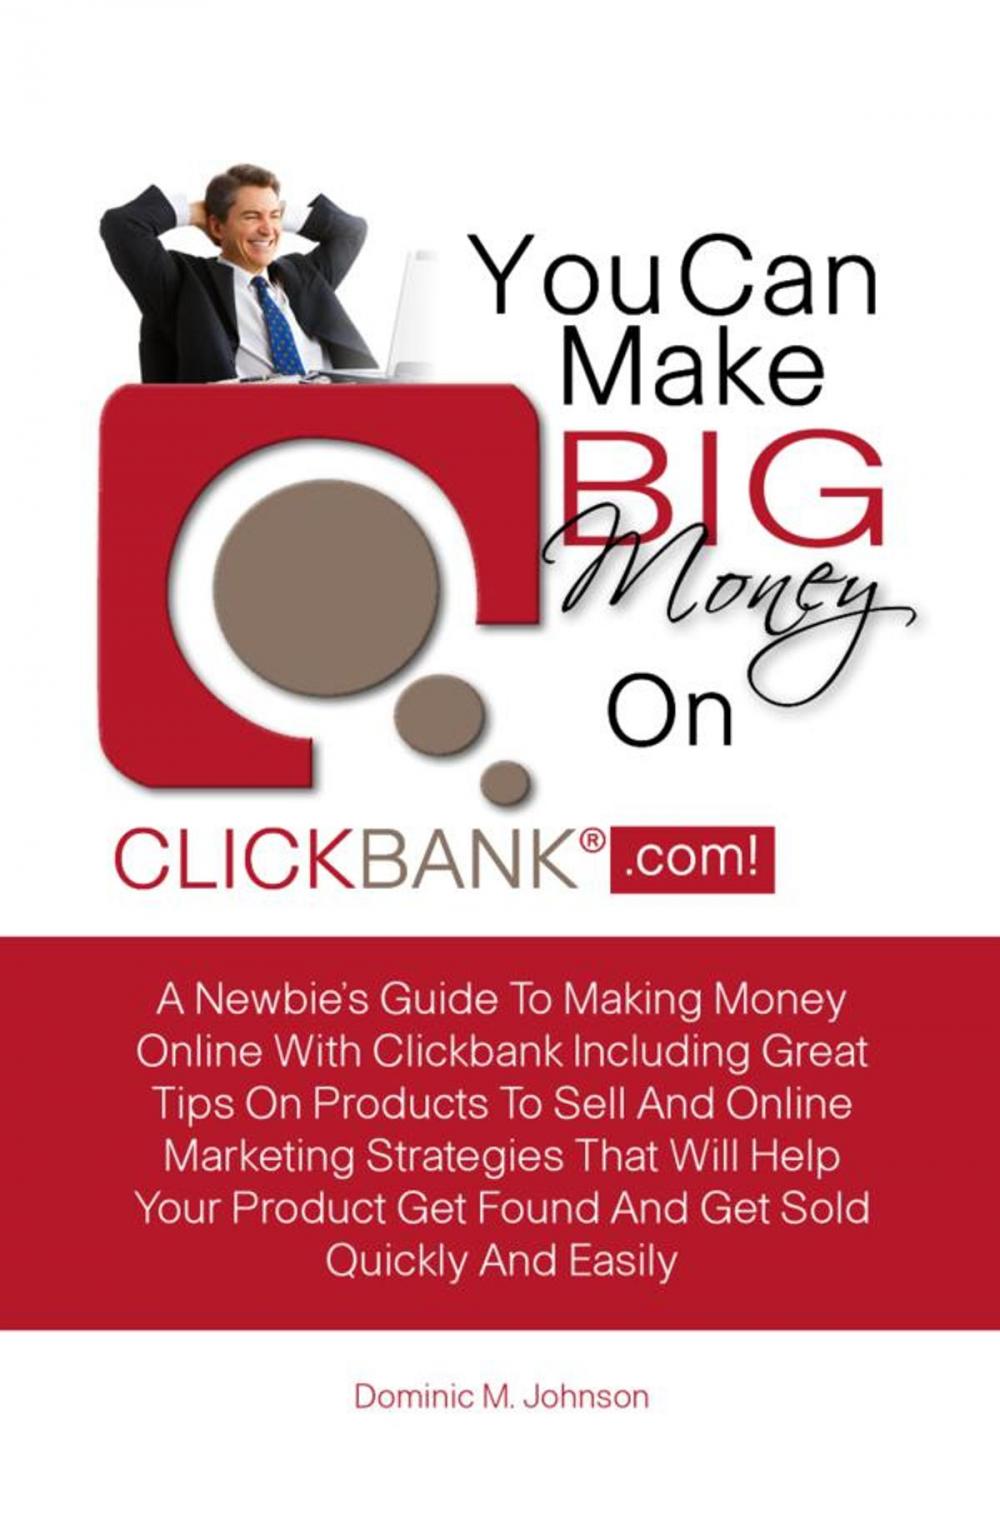 Big bigCover of You Can Make Big Money On Clickbank.com!